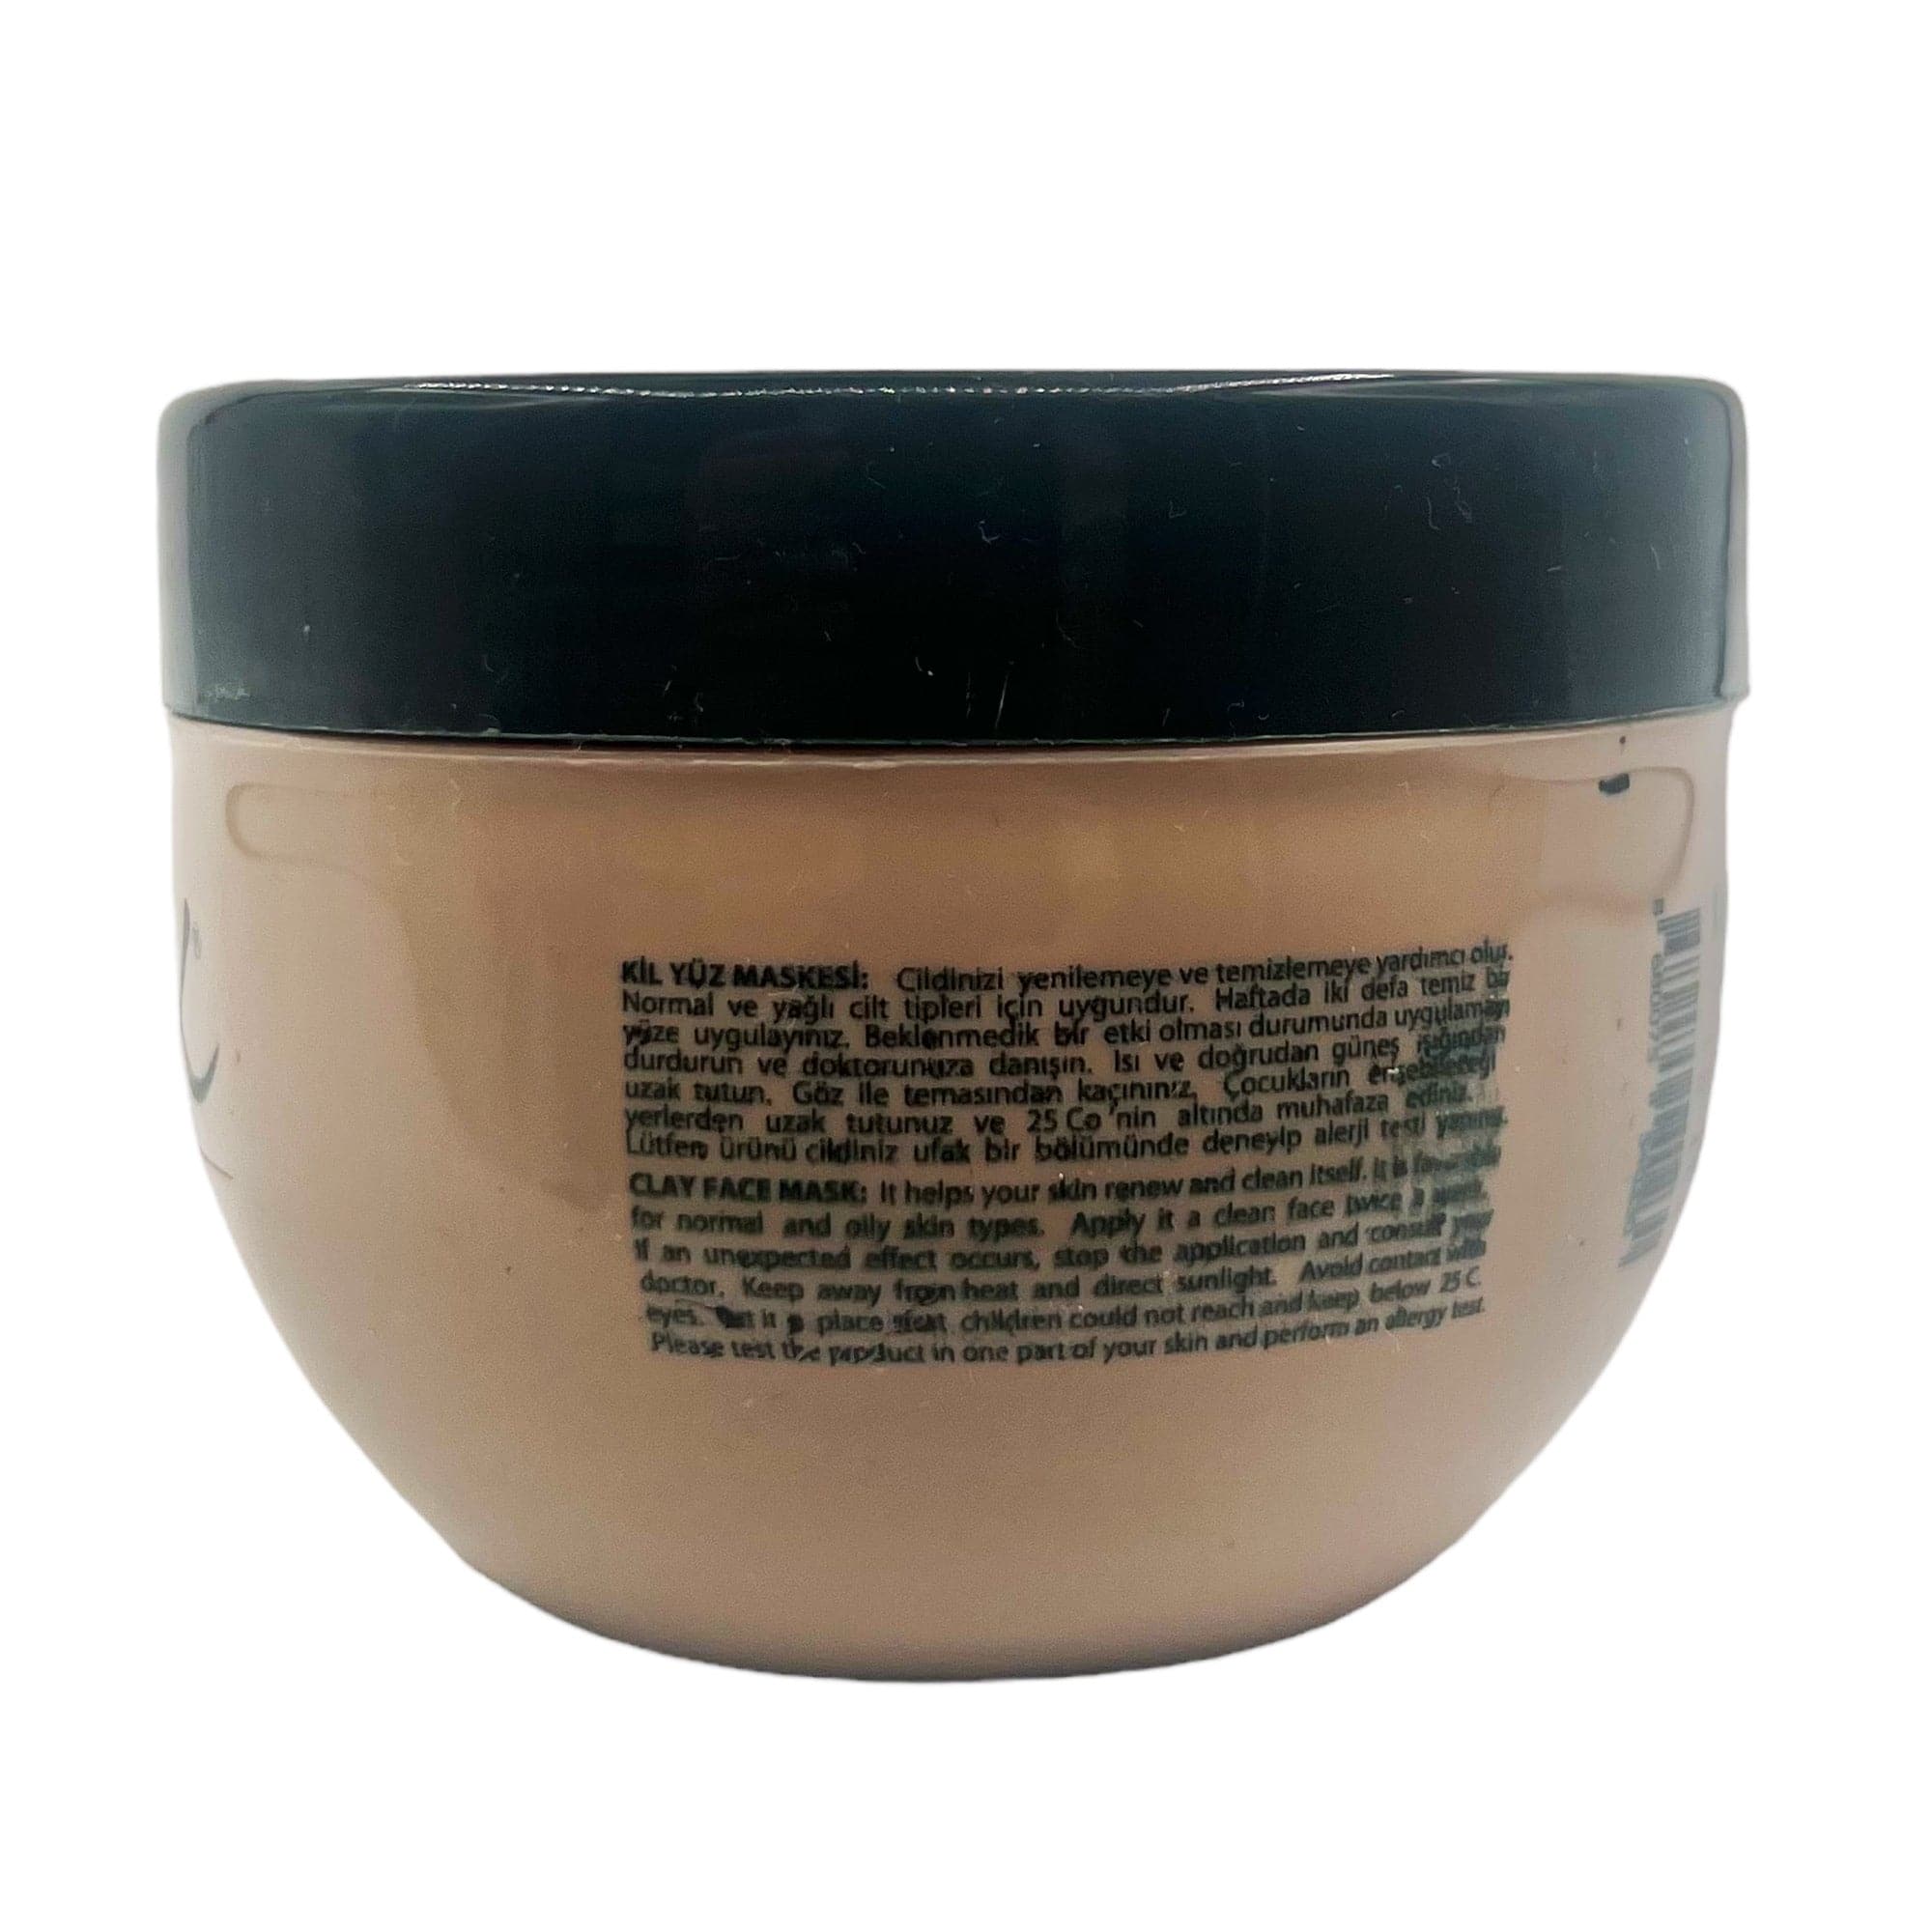 Zenix - Clay Face Mask Argan Oil 350g